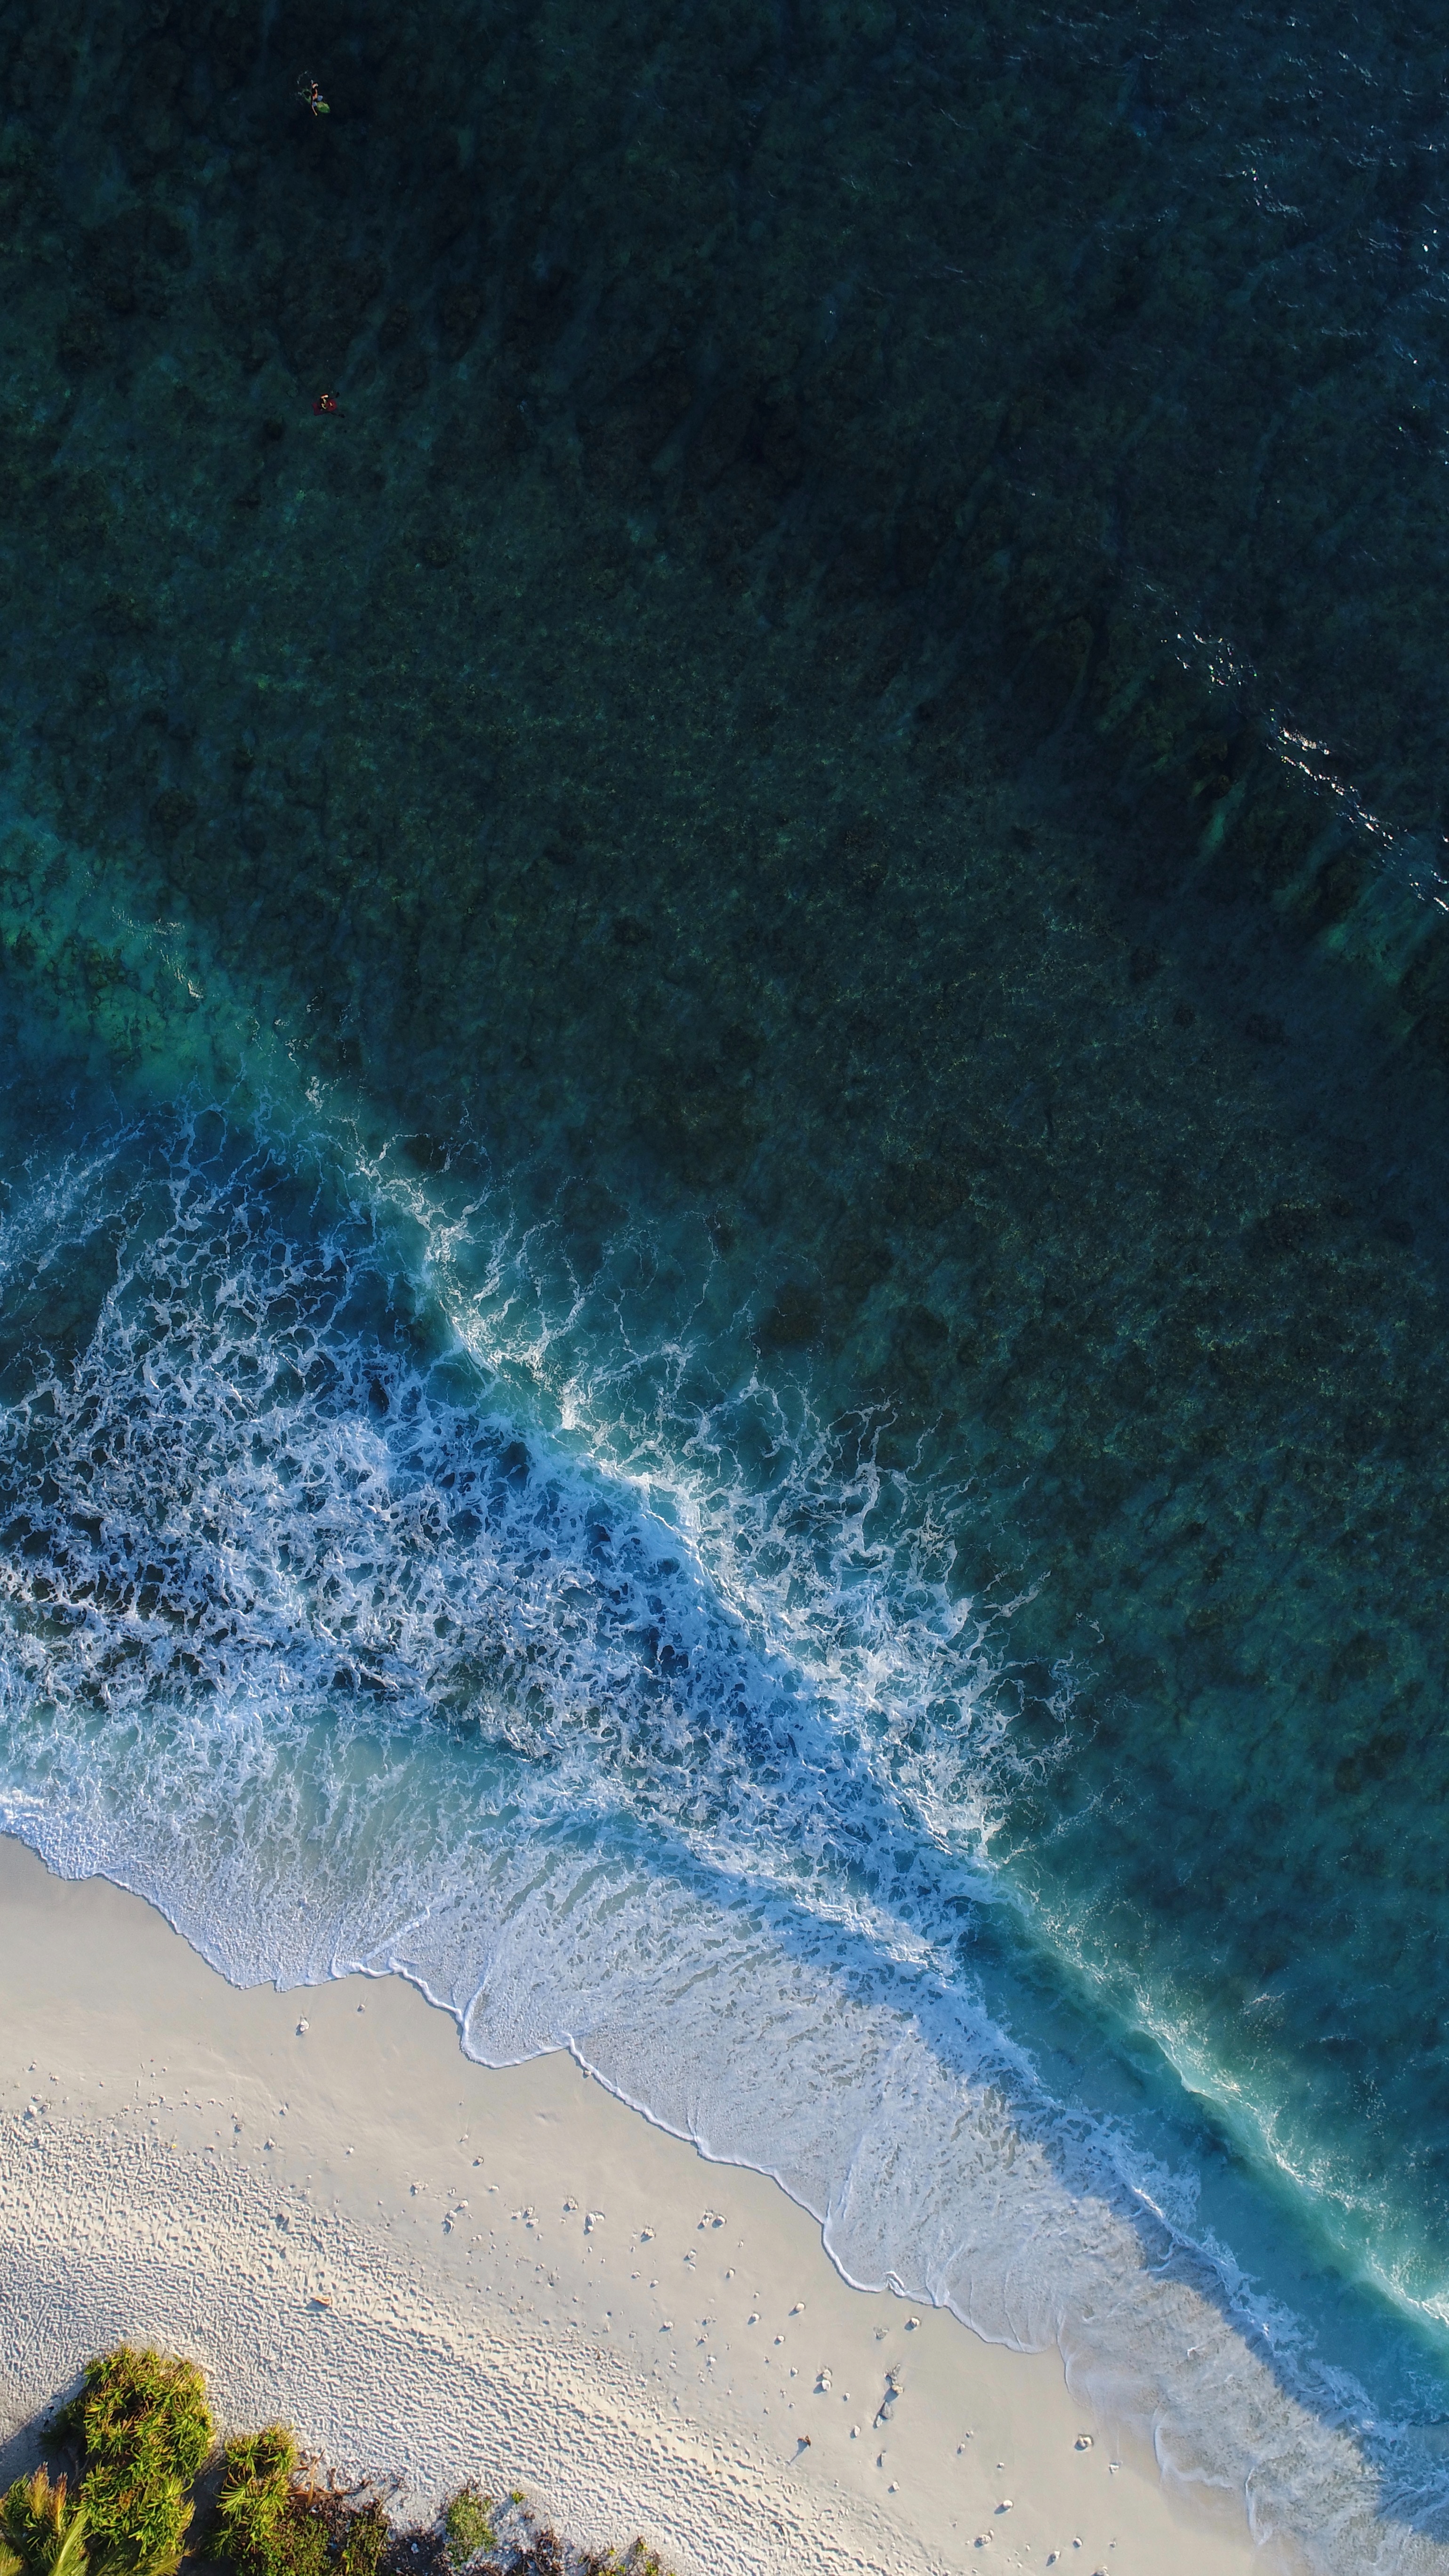 158060 descargar imagen vista desde arriba, naturaleza, agua, oceano, océano, navegar, surfear, maldivas: fondos de pantalla y protectores de pantalla gratis